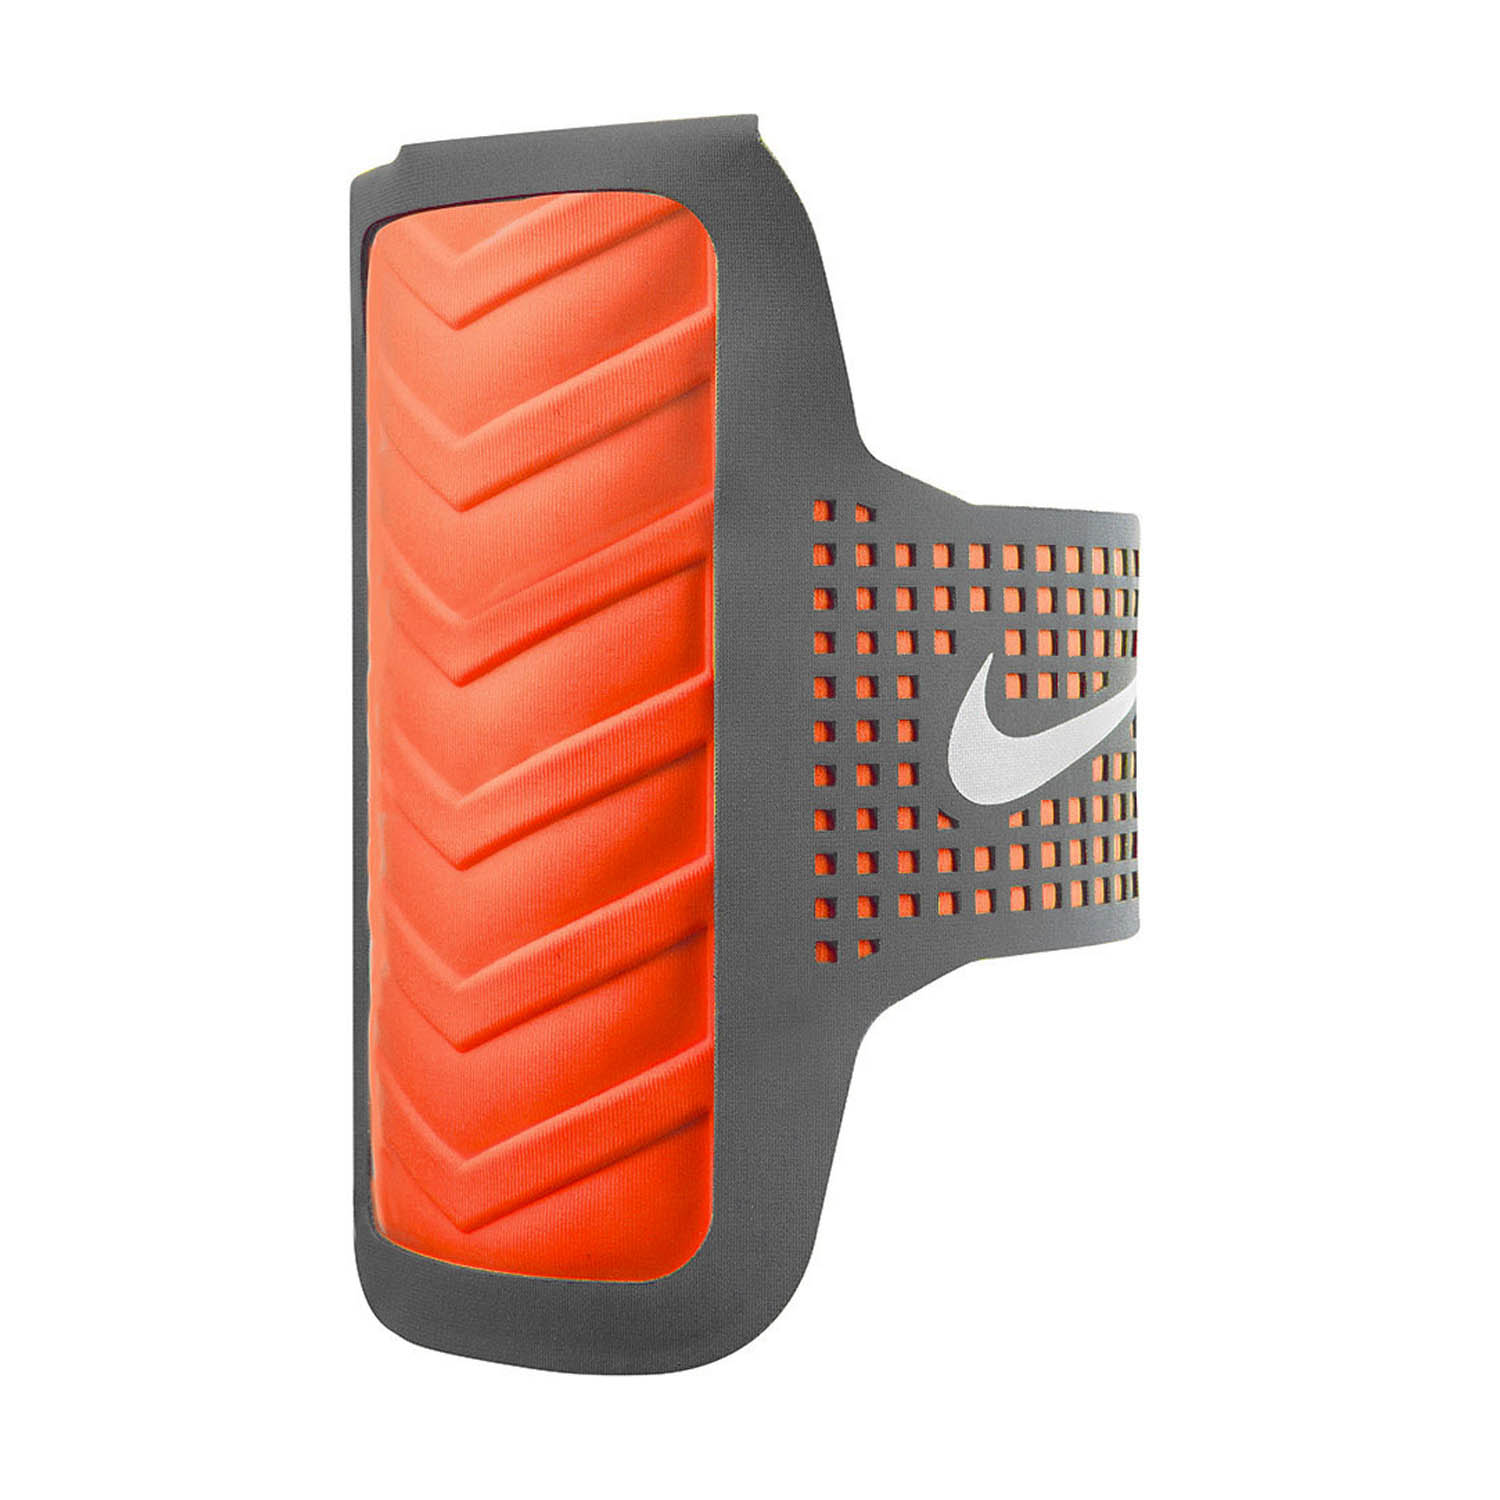 Nike Distance Galaxy S4 Arm Band - Grey/Orange